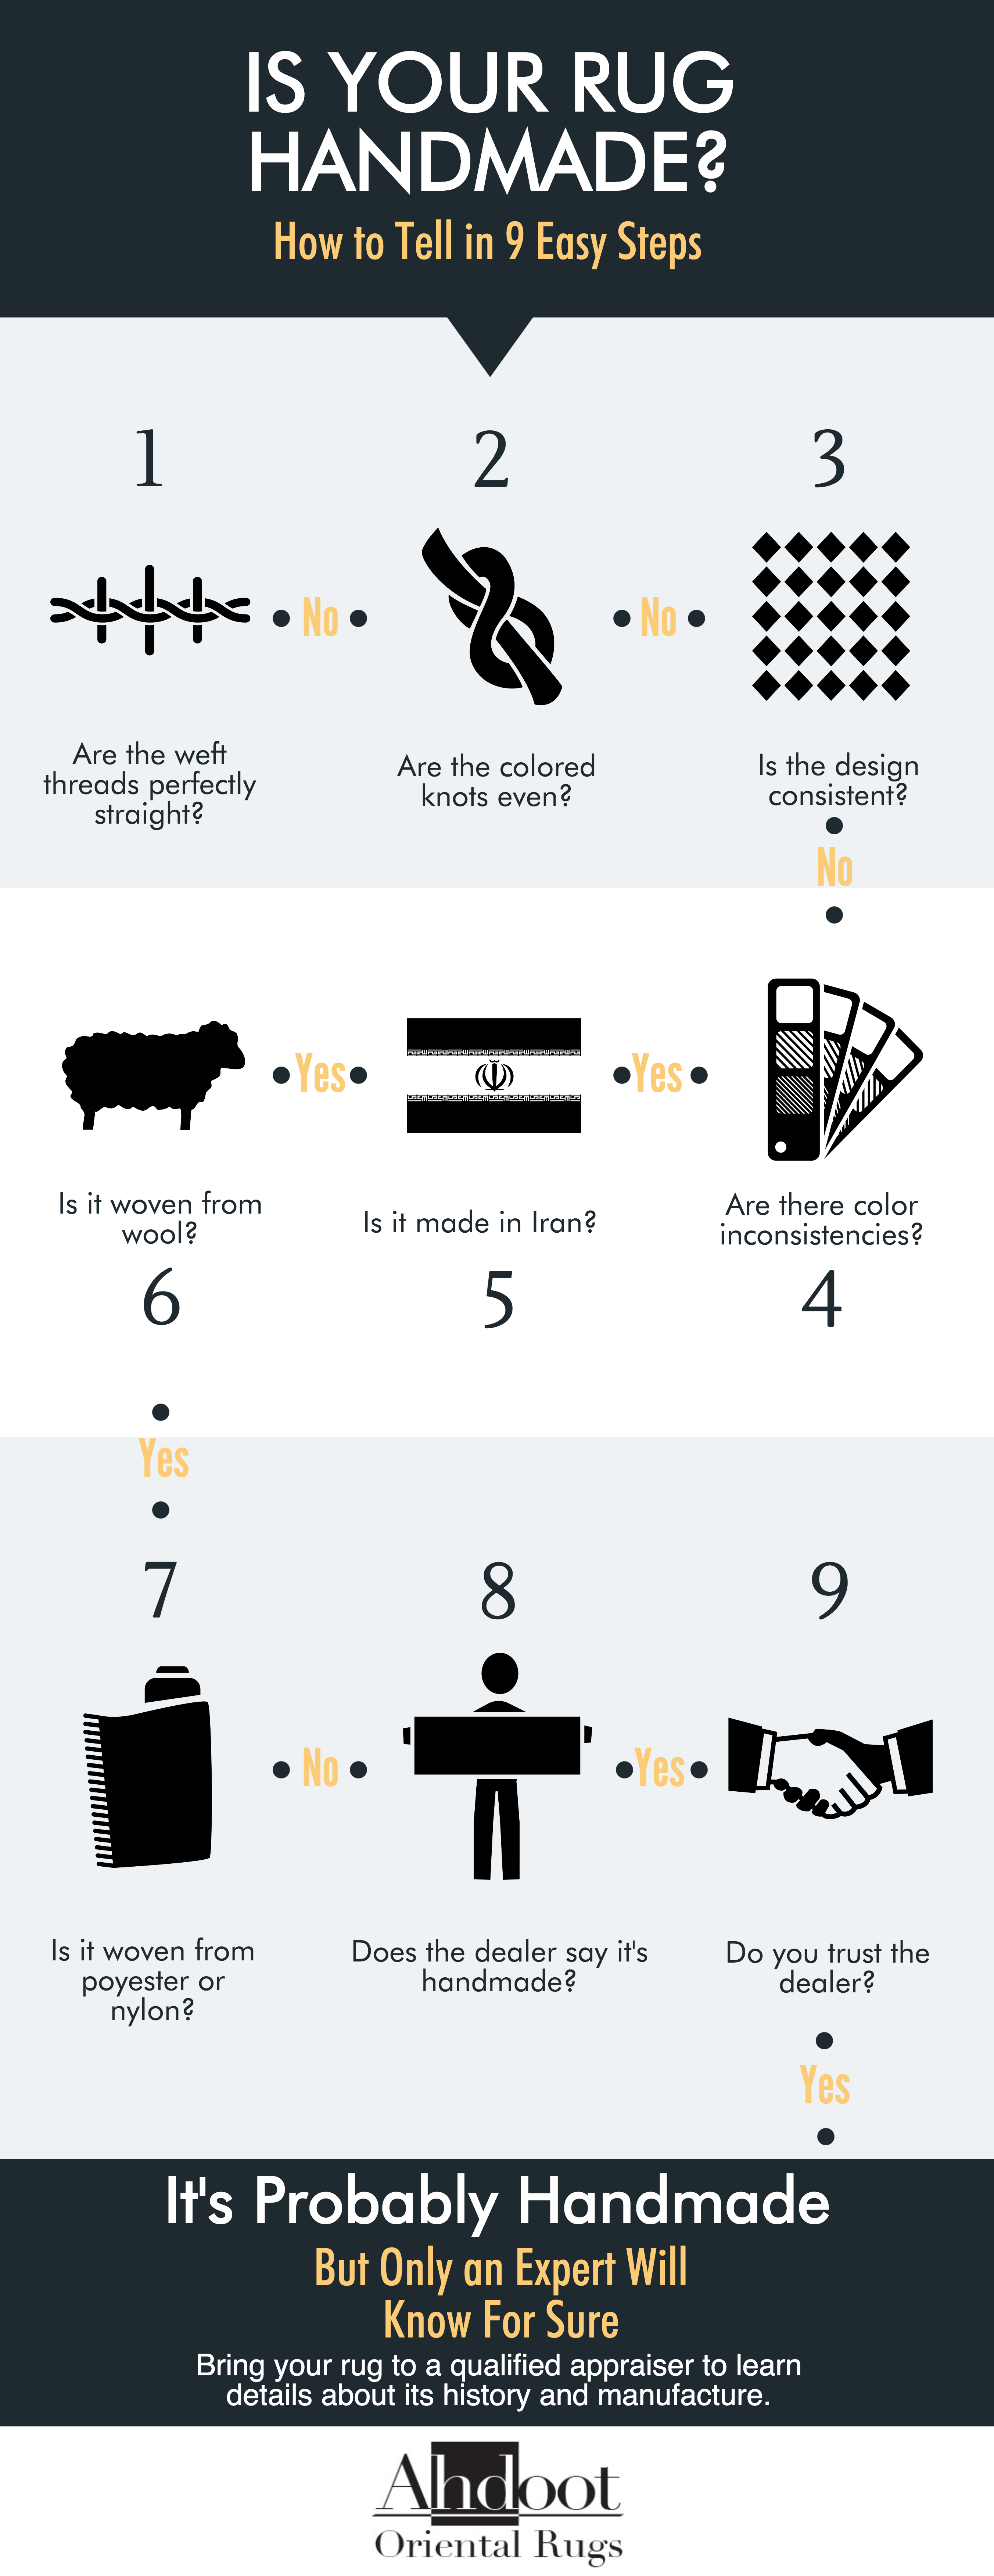 Ahdoot Infographic - Is Your Rug Handmade?